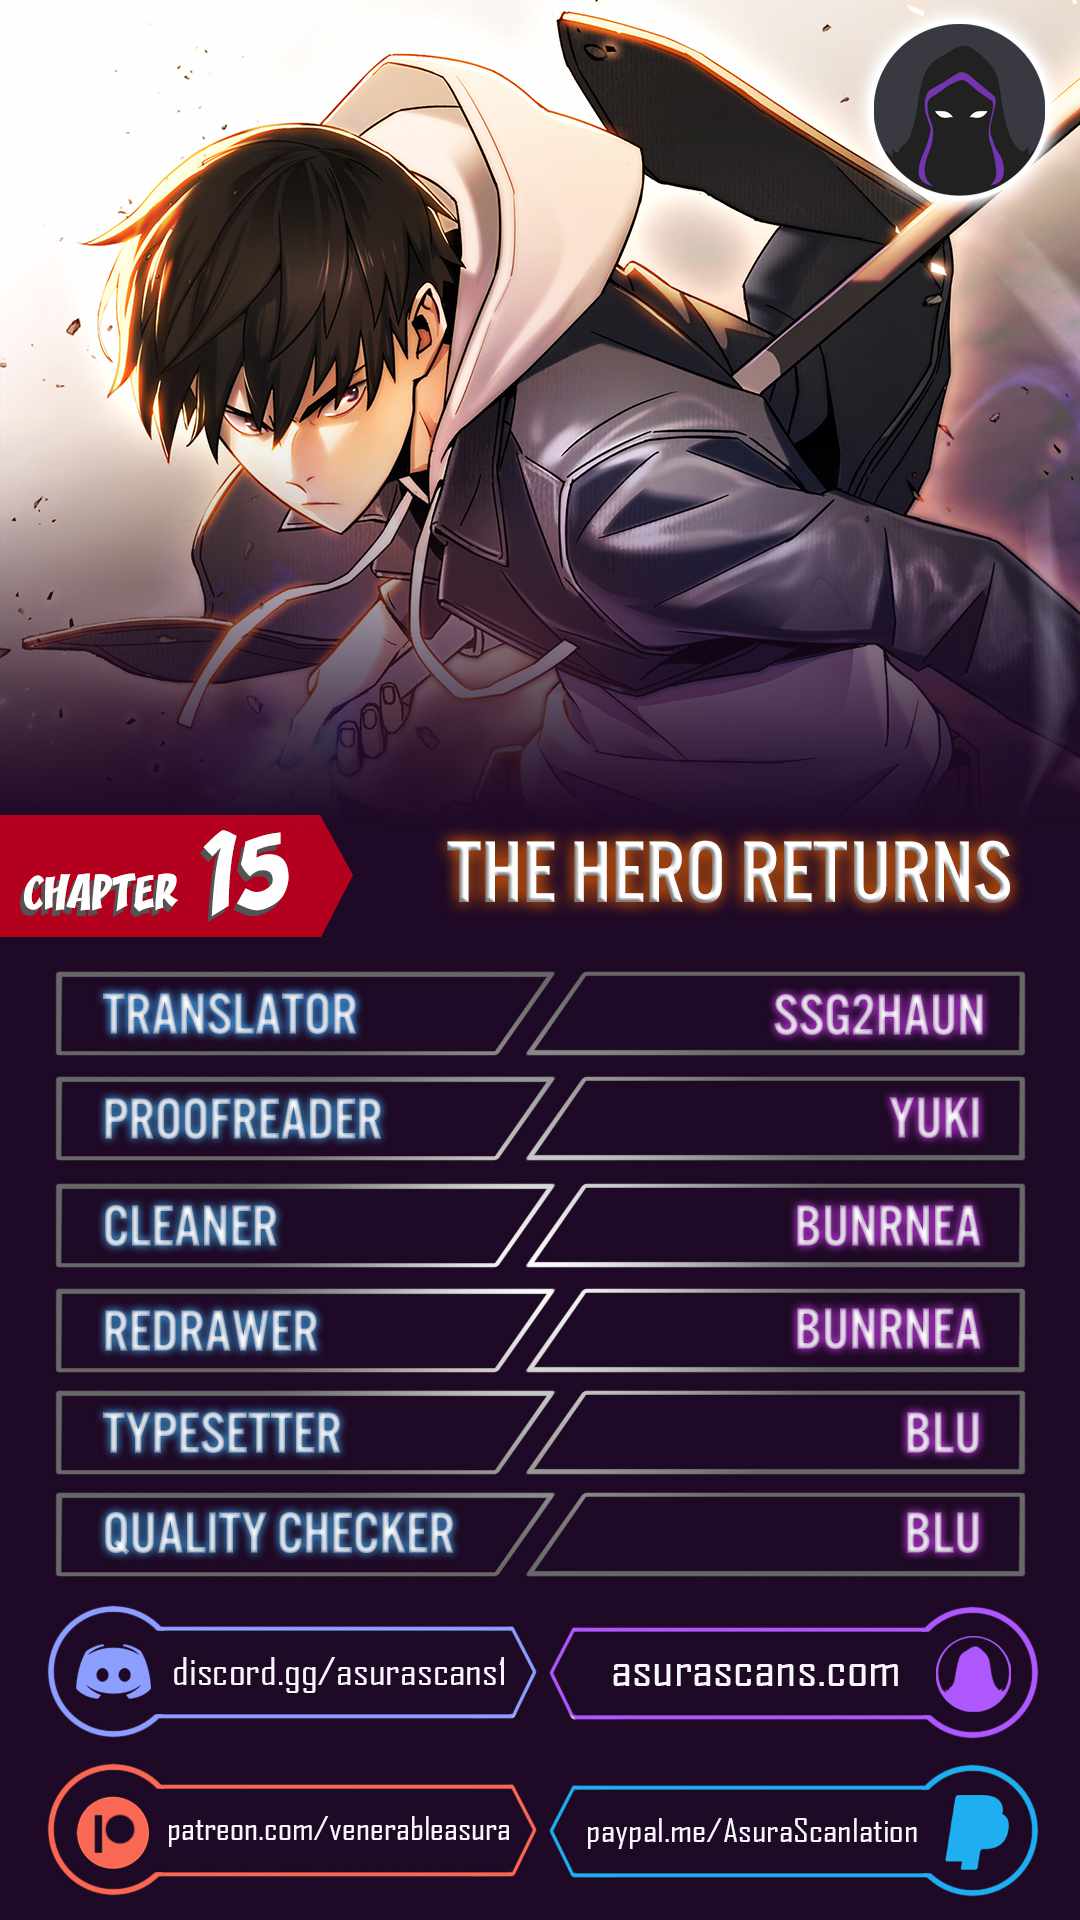 The Hero Returns chapter 15